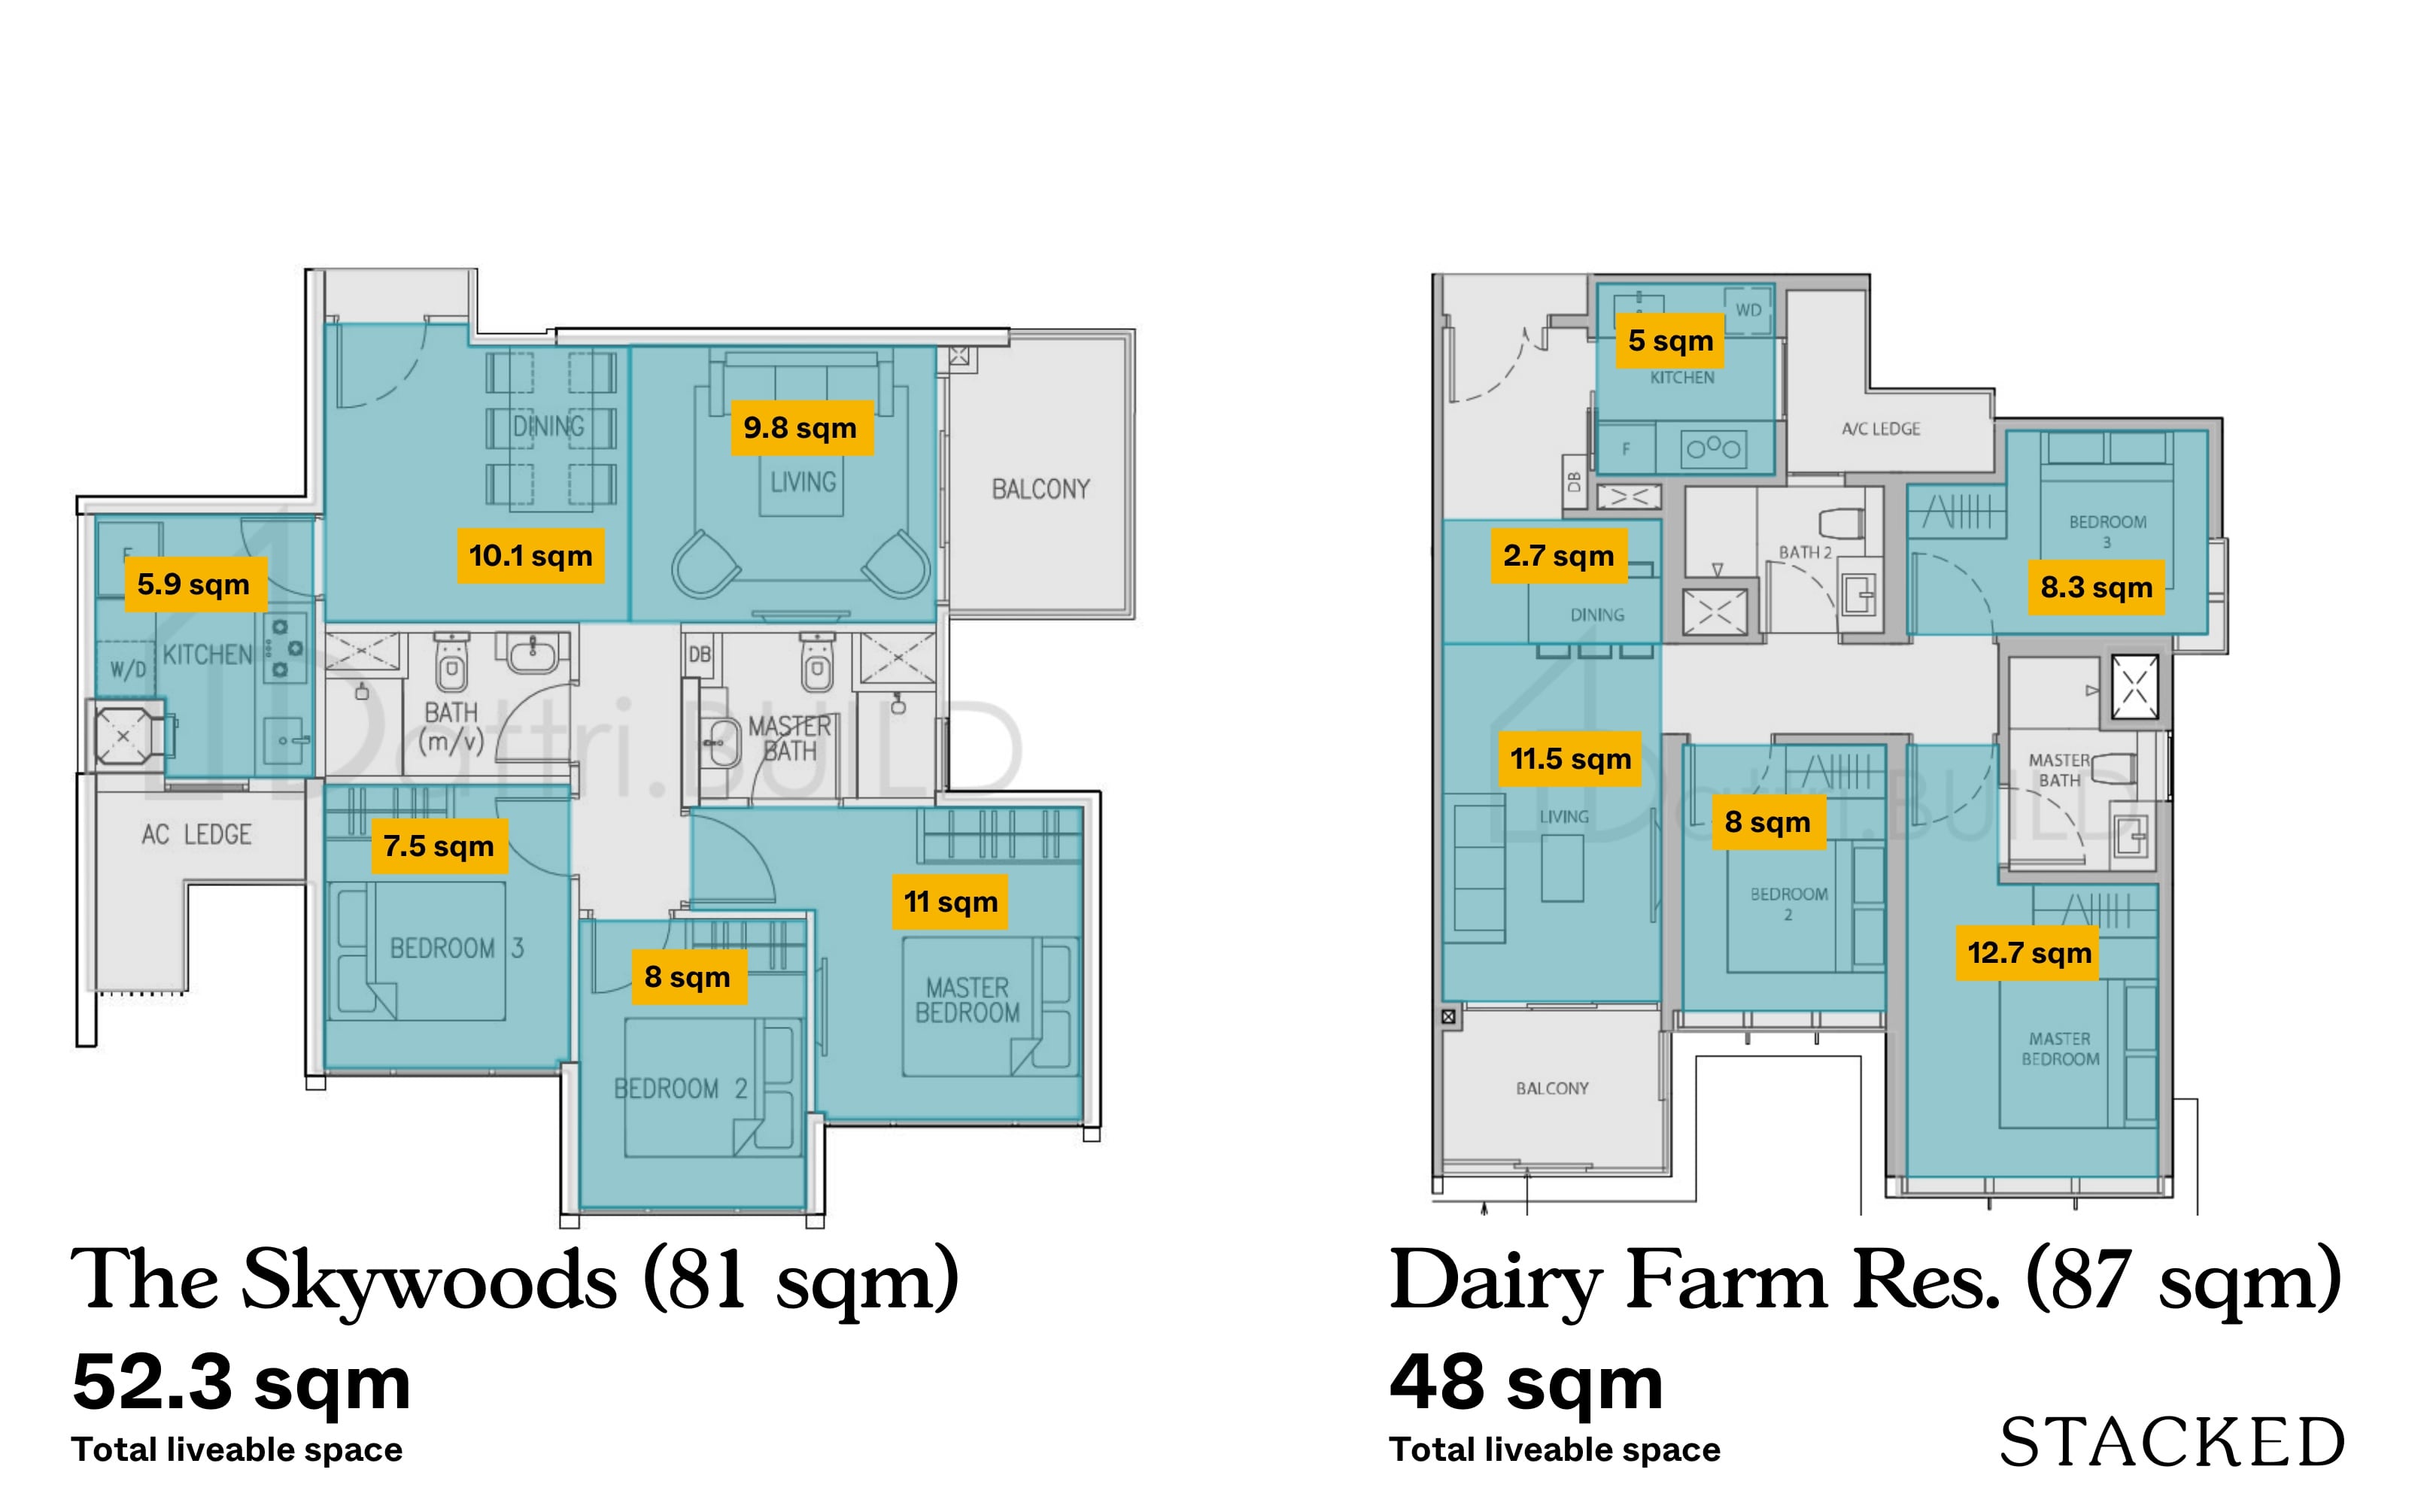 Dairy Farm vs Skywoods 3br comparison